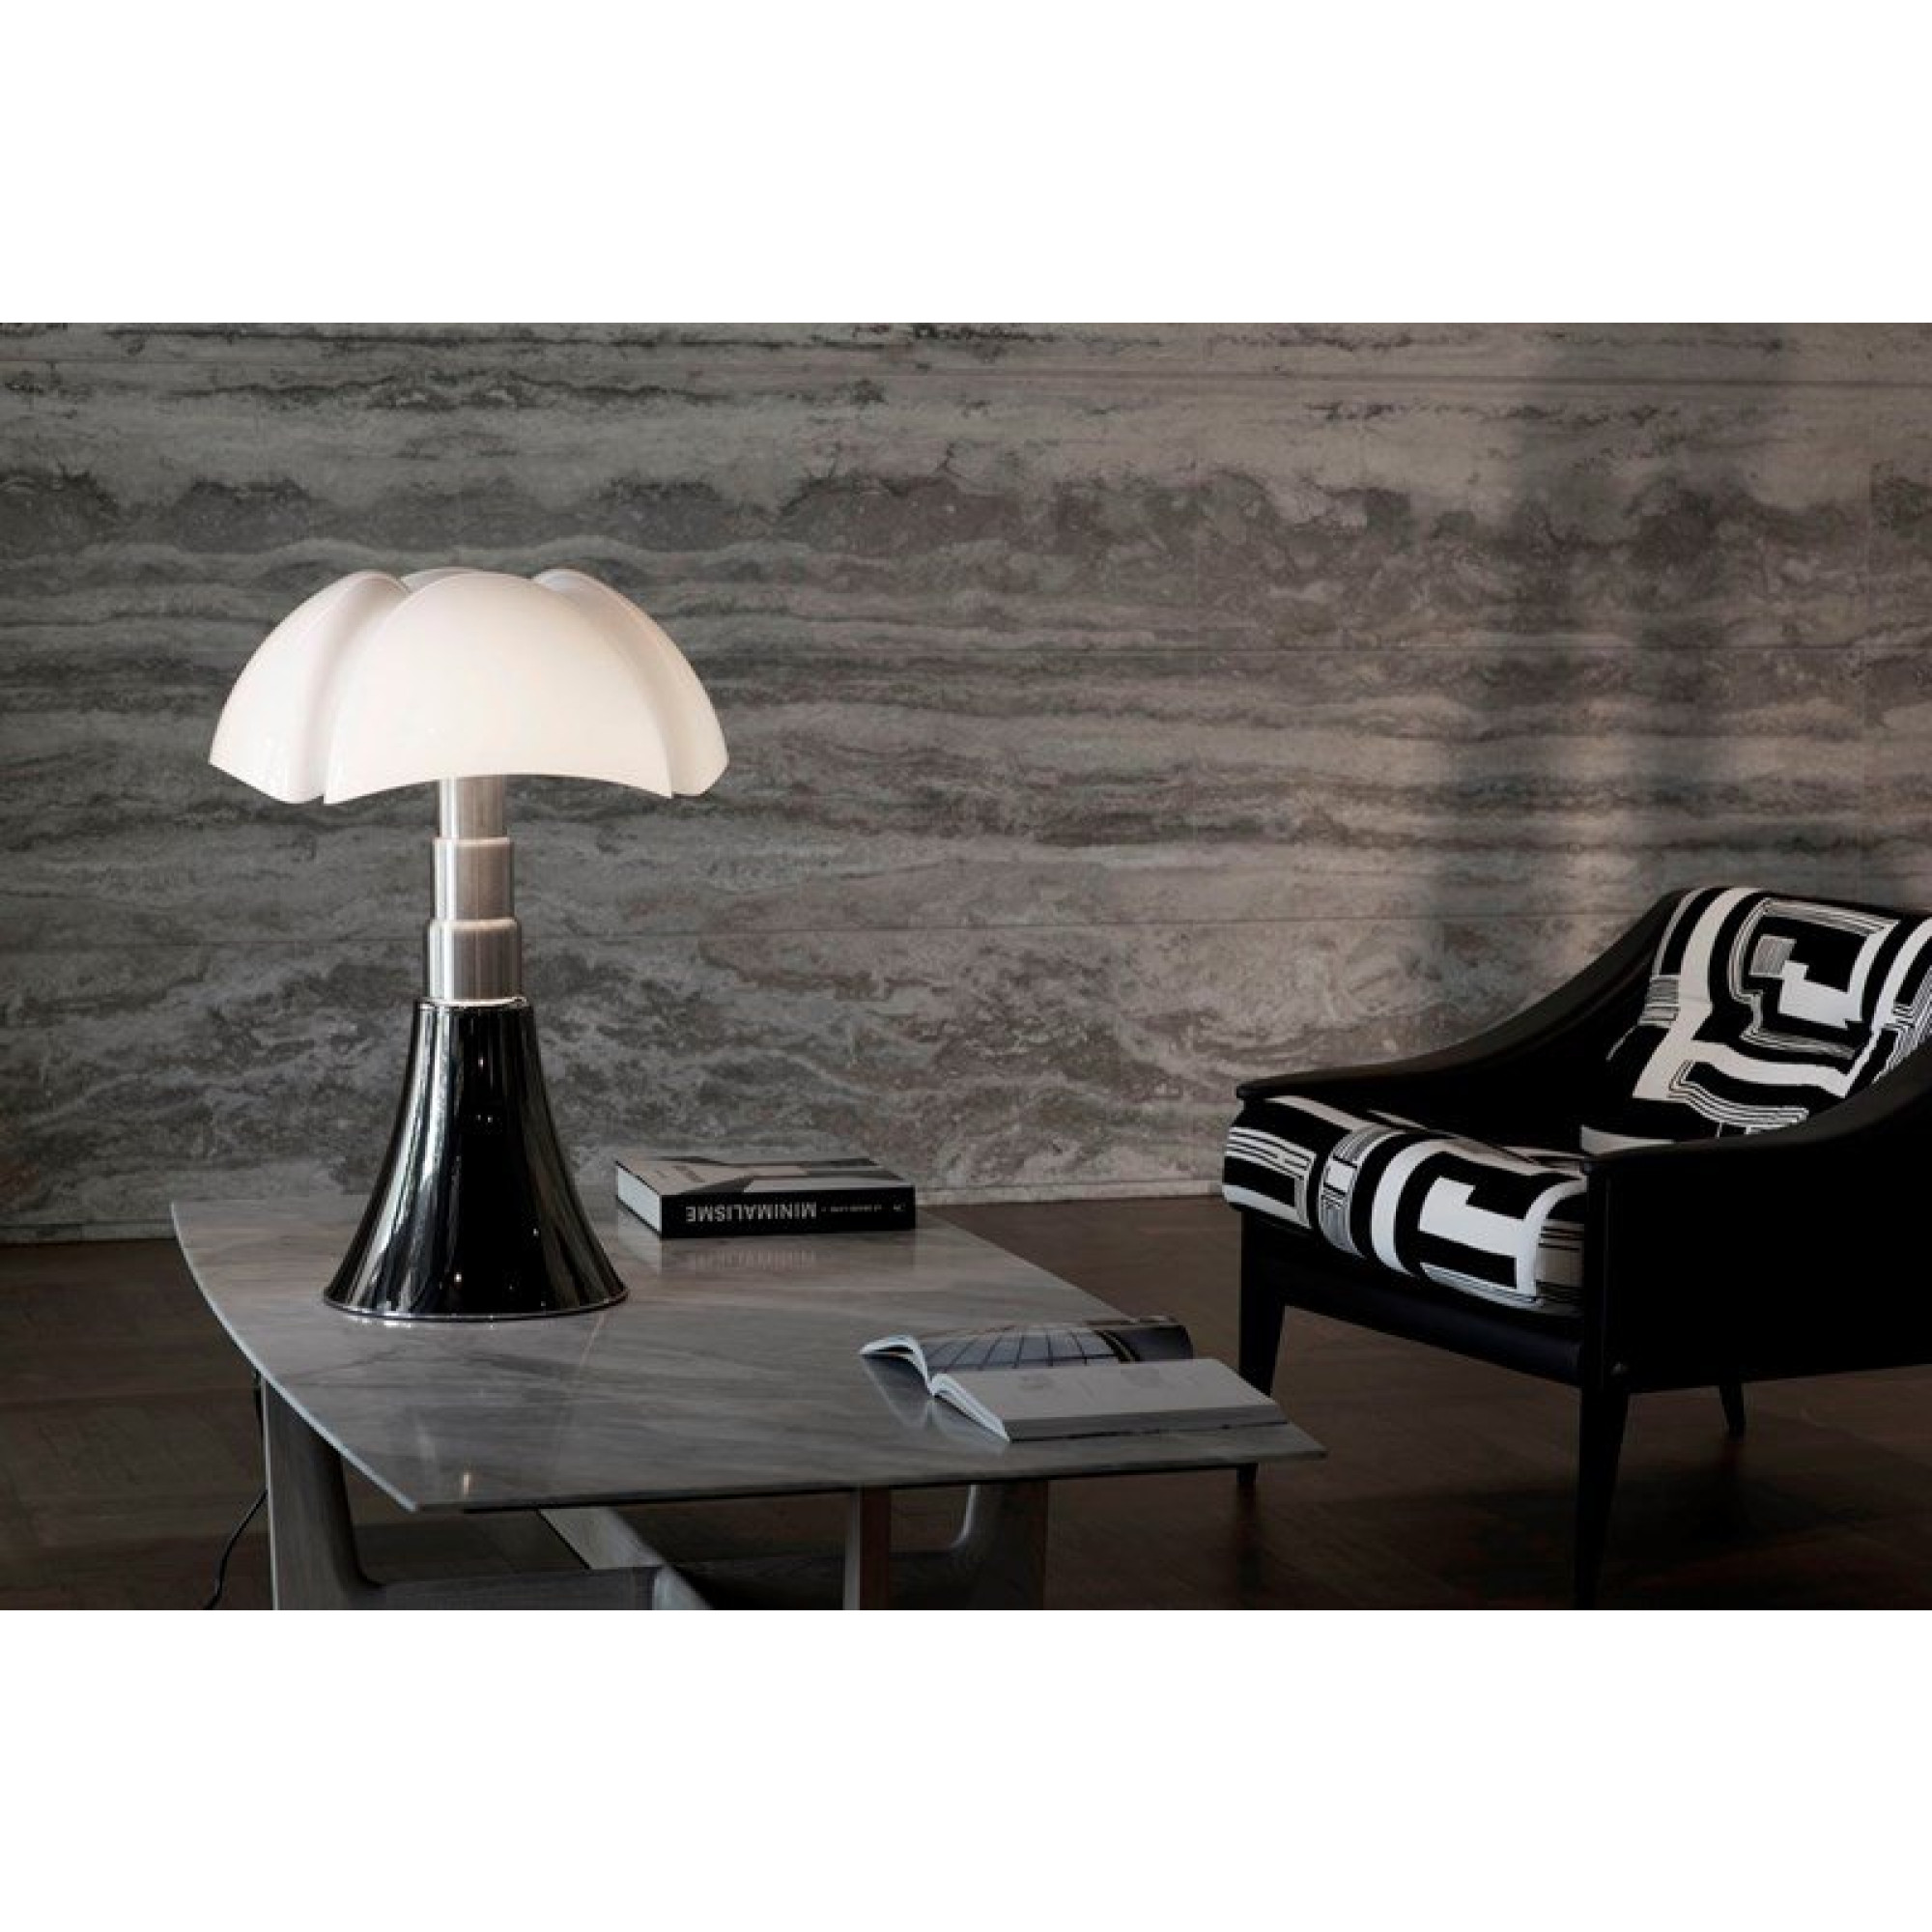 Pipistrello Large Table Lamp, Agave Green - Martinelli Luce @ RoyalDesign